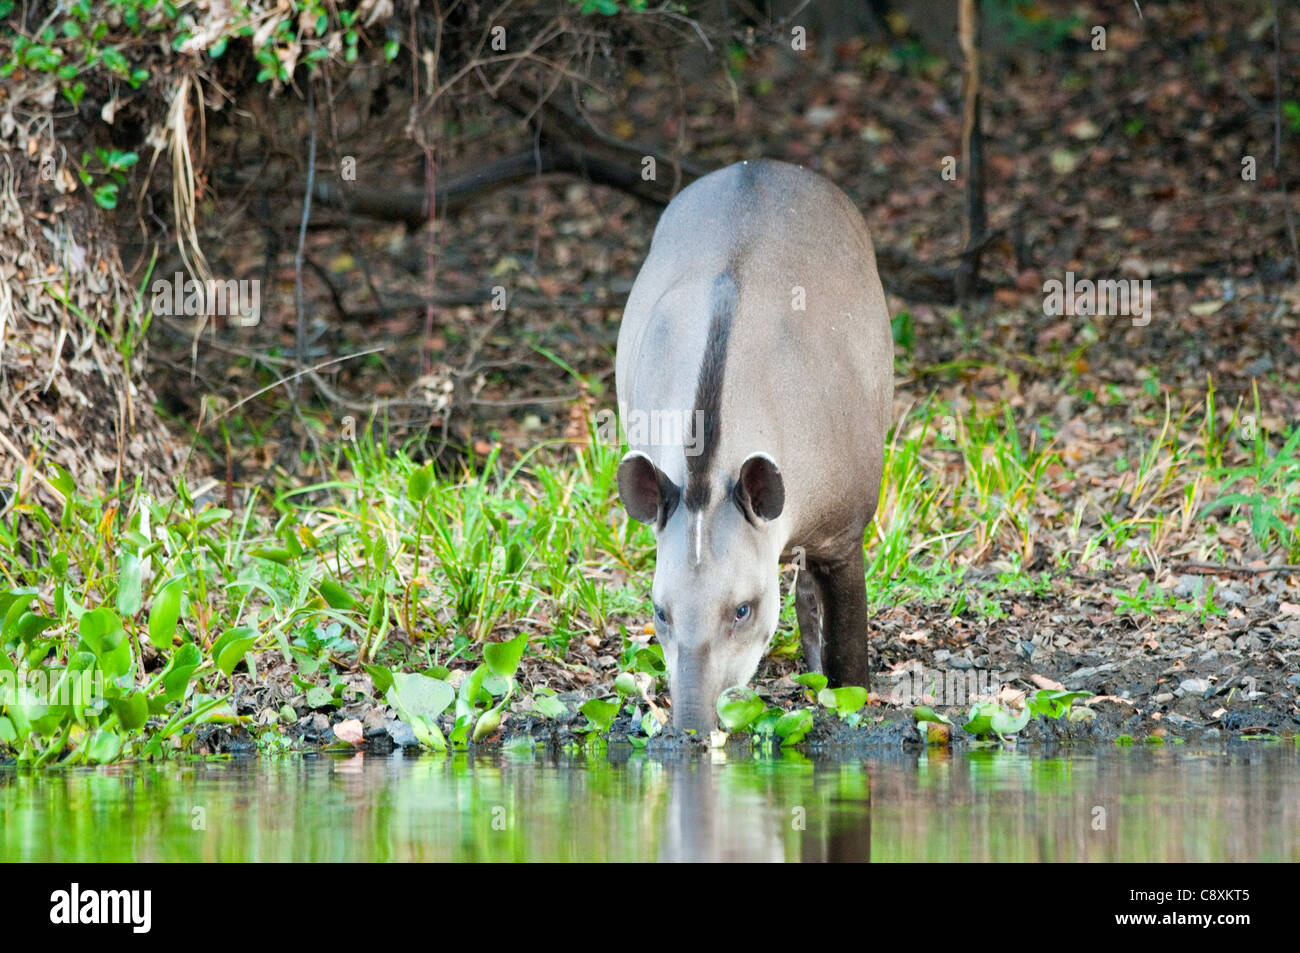 Brasilianische tapir Stockfoto